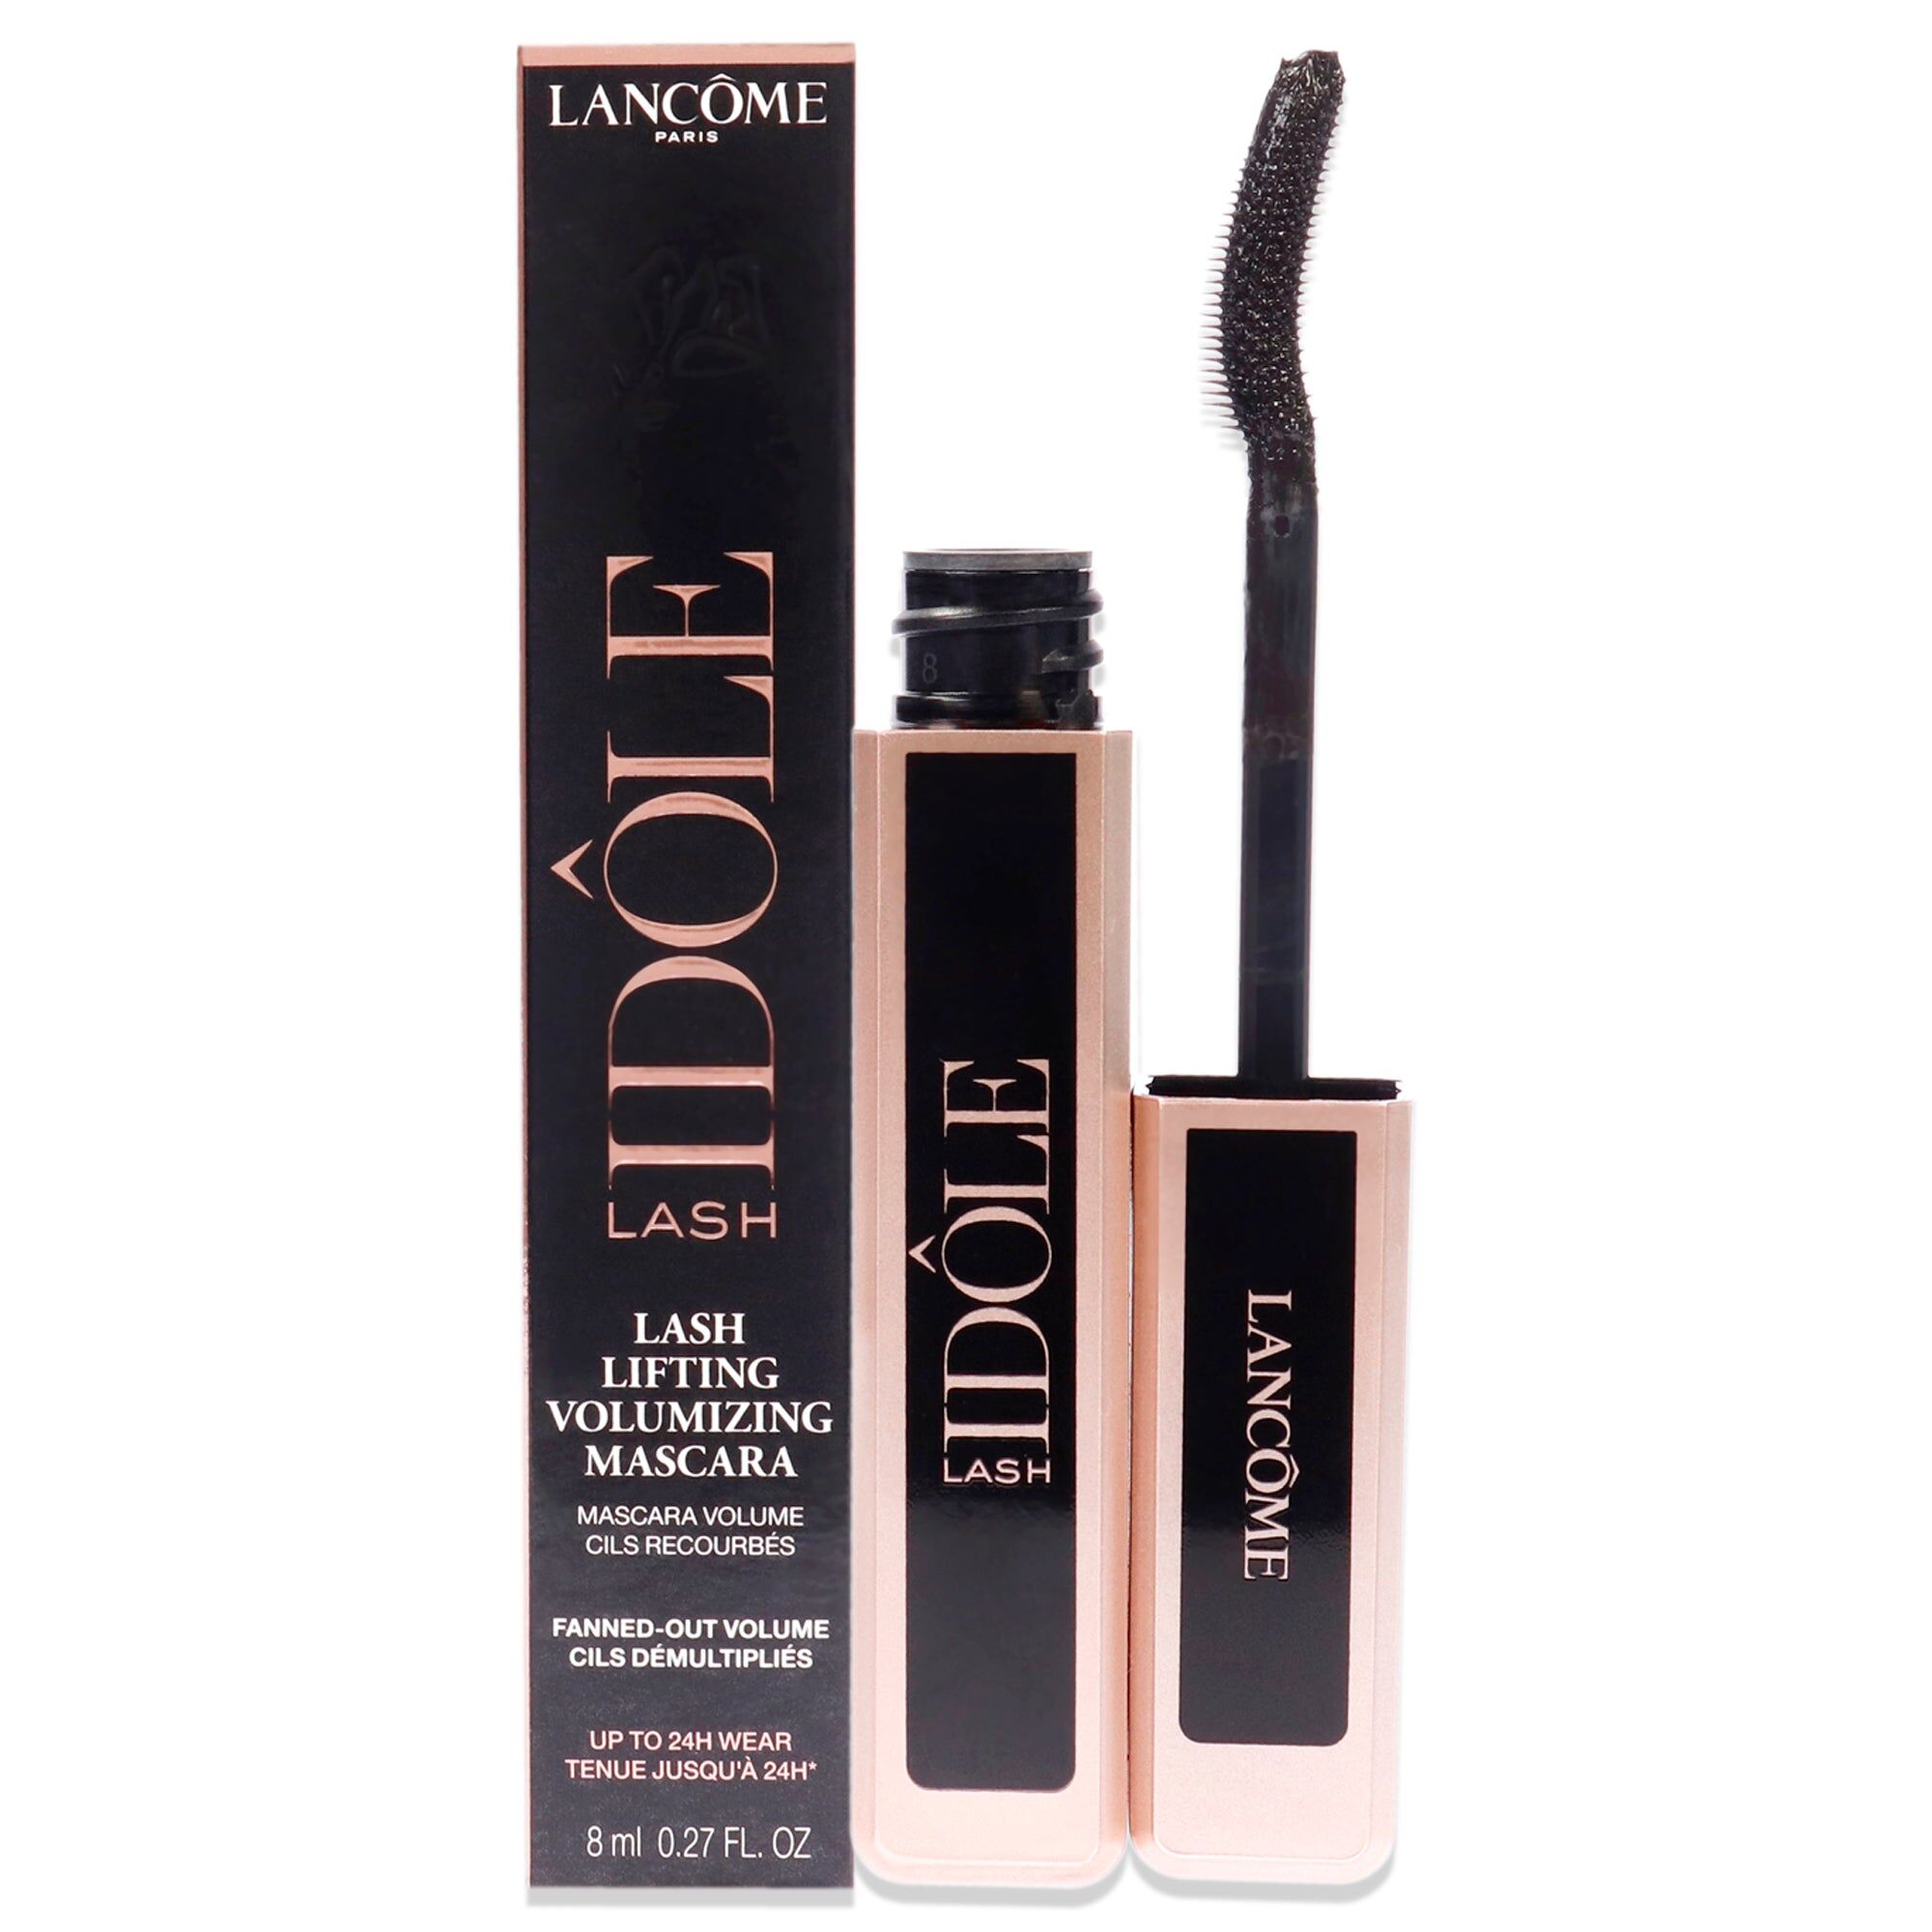 Lash Idole Lifting and Volumizing Mascara - 01 Glossy Black by Lancome for Women - 0.27 oz Mascara Small